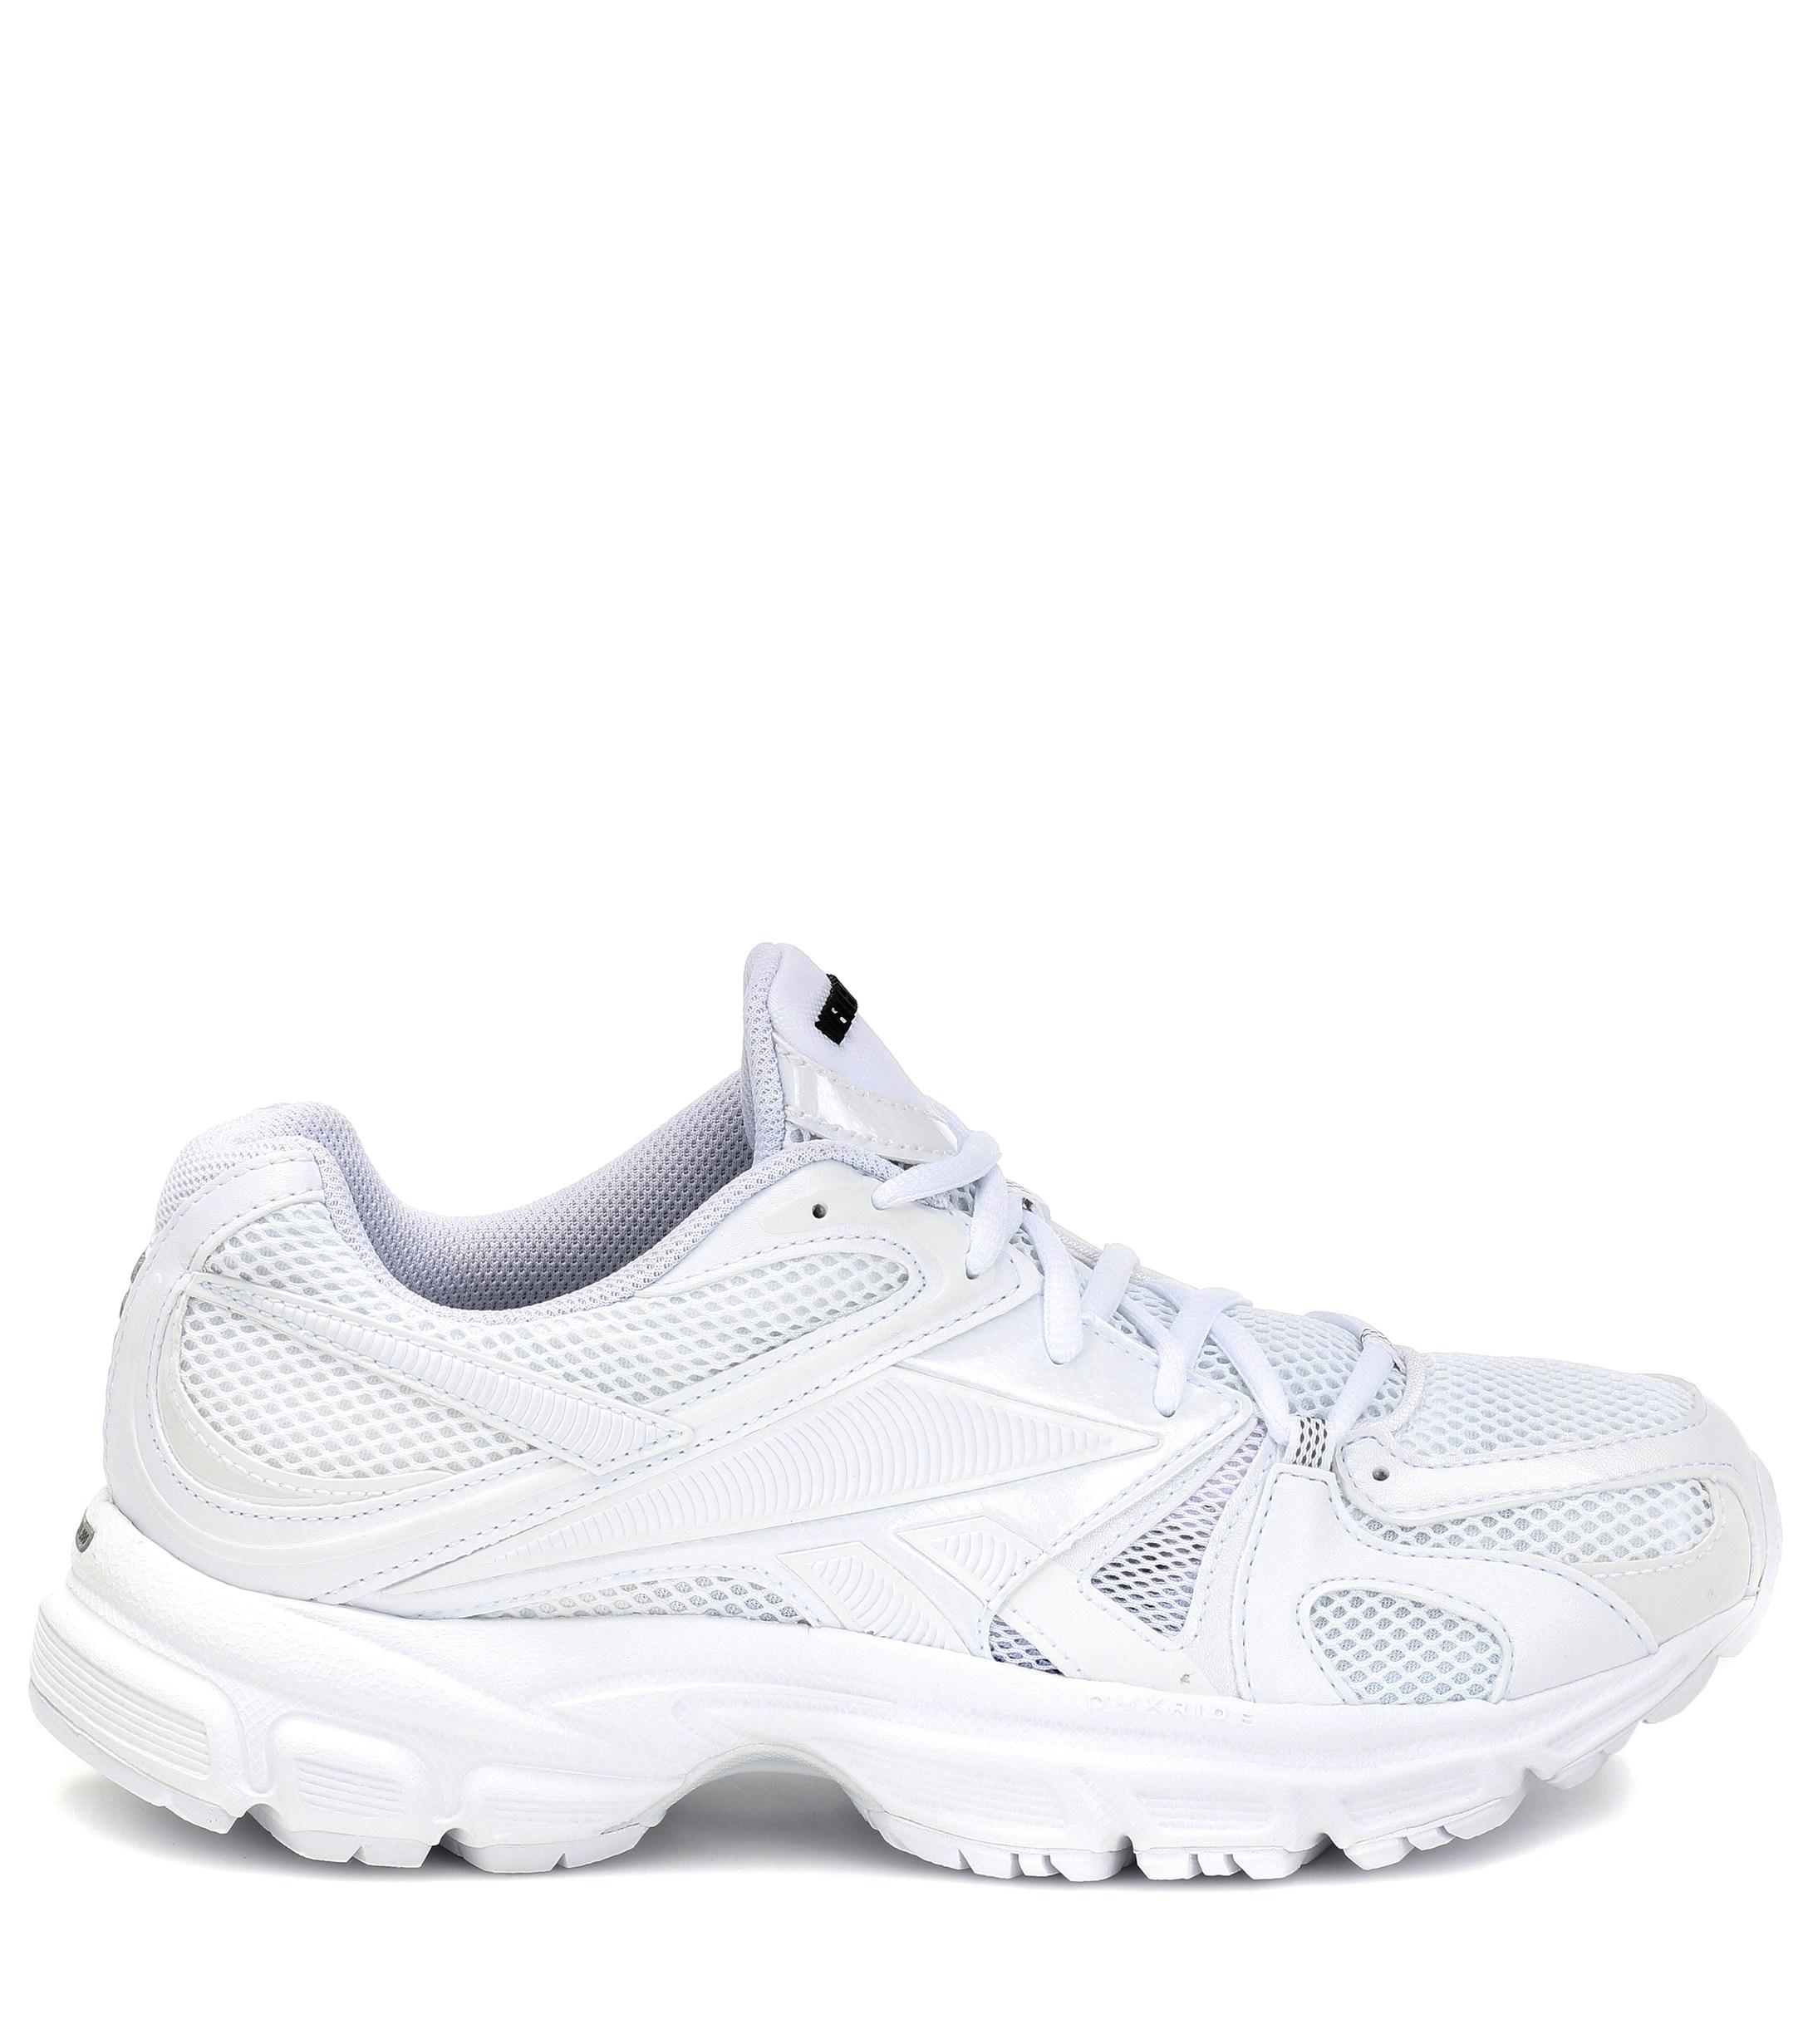 Vetements X Reebok Spike Runner 200 Sneakers in White